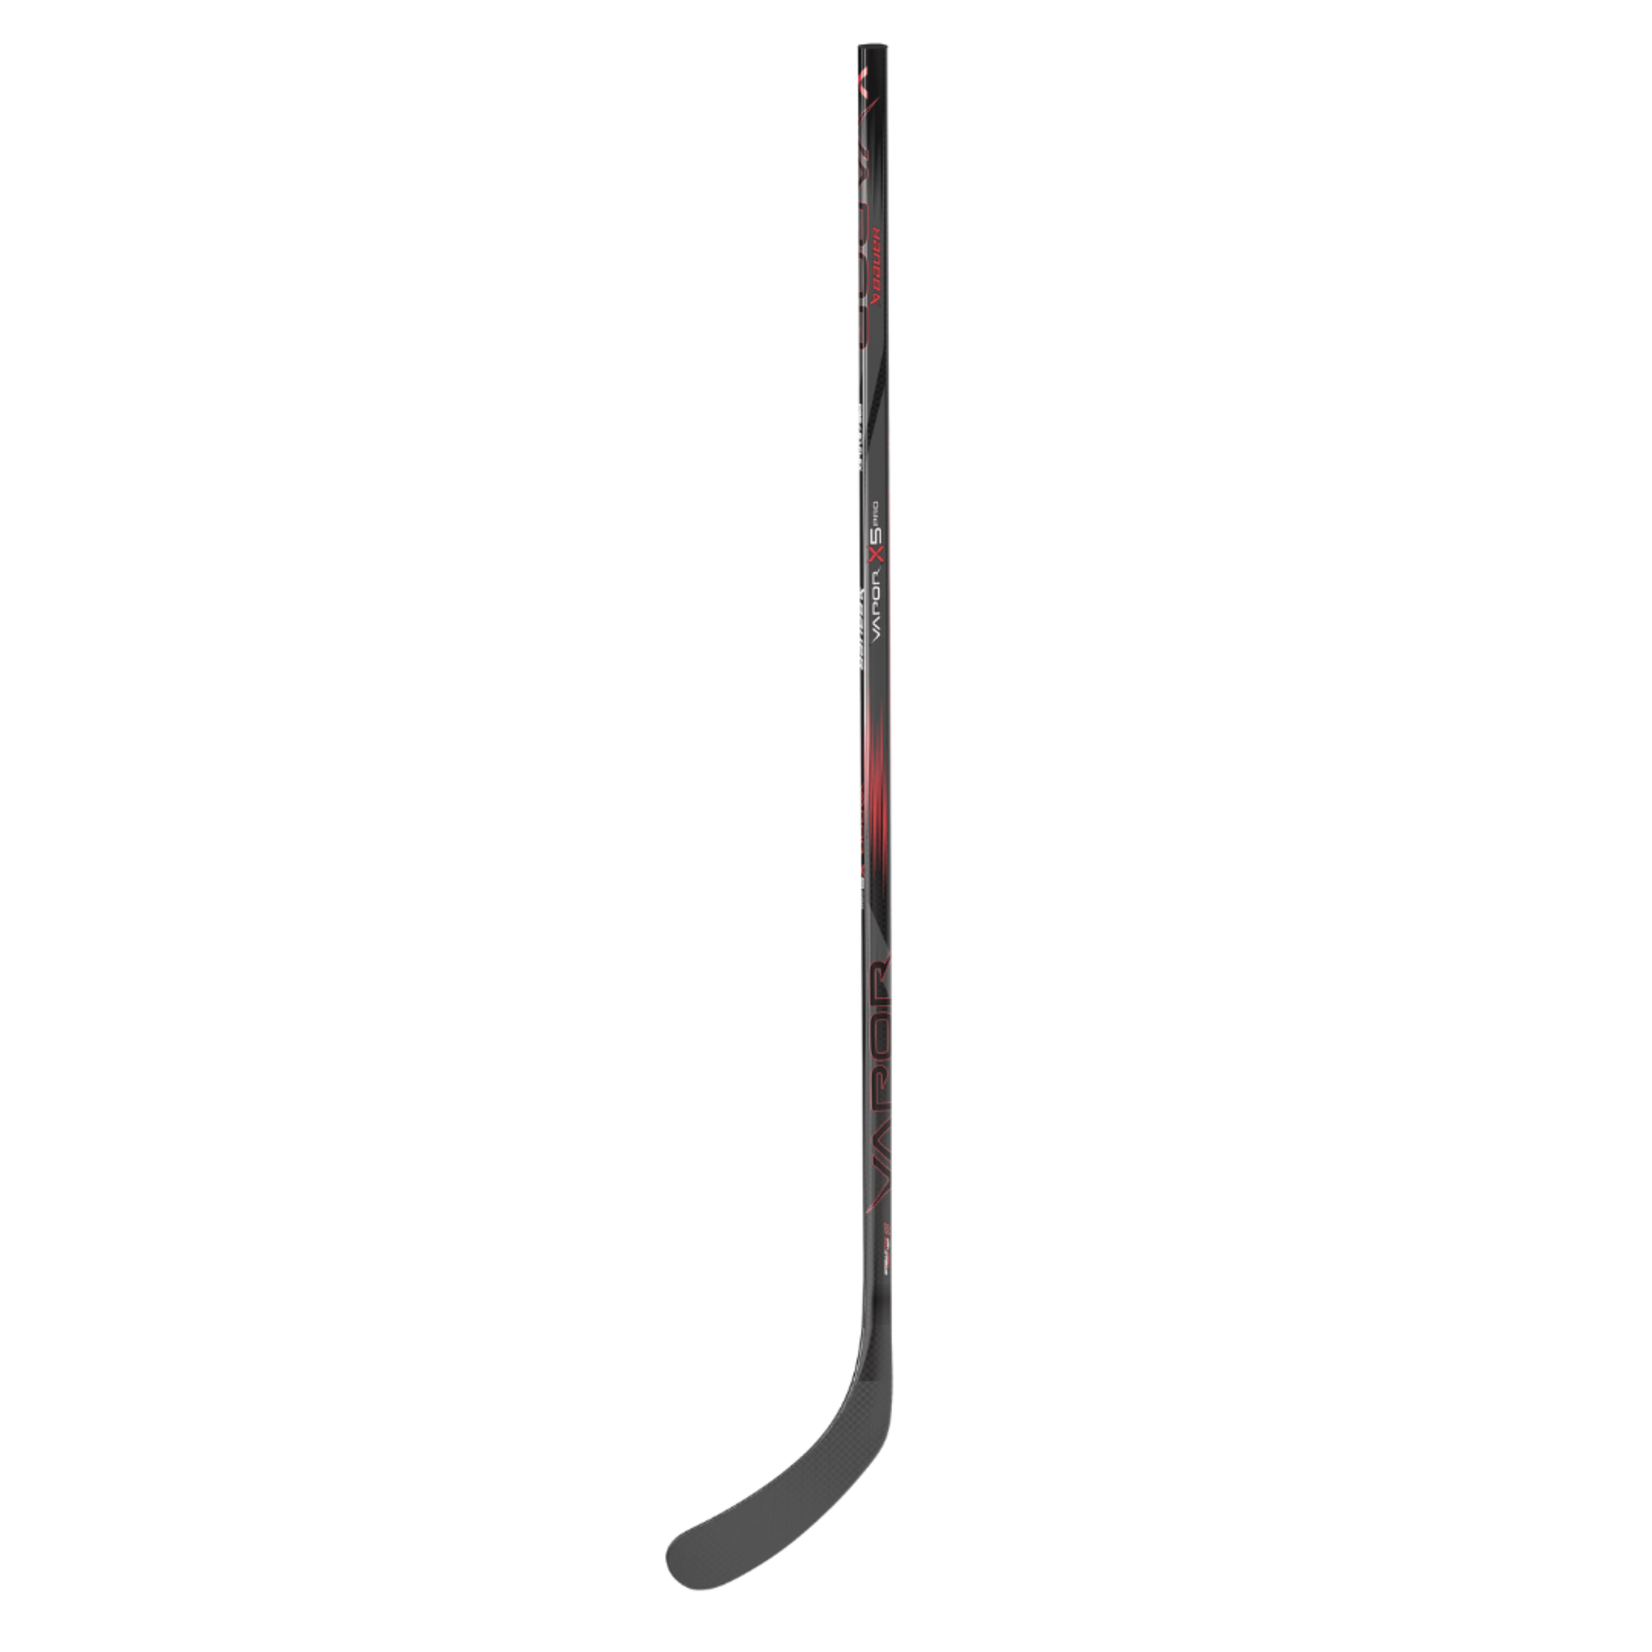 Bauer Bauer Hockey Stick, Vapor X5 Pro, Grip, Intermediate